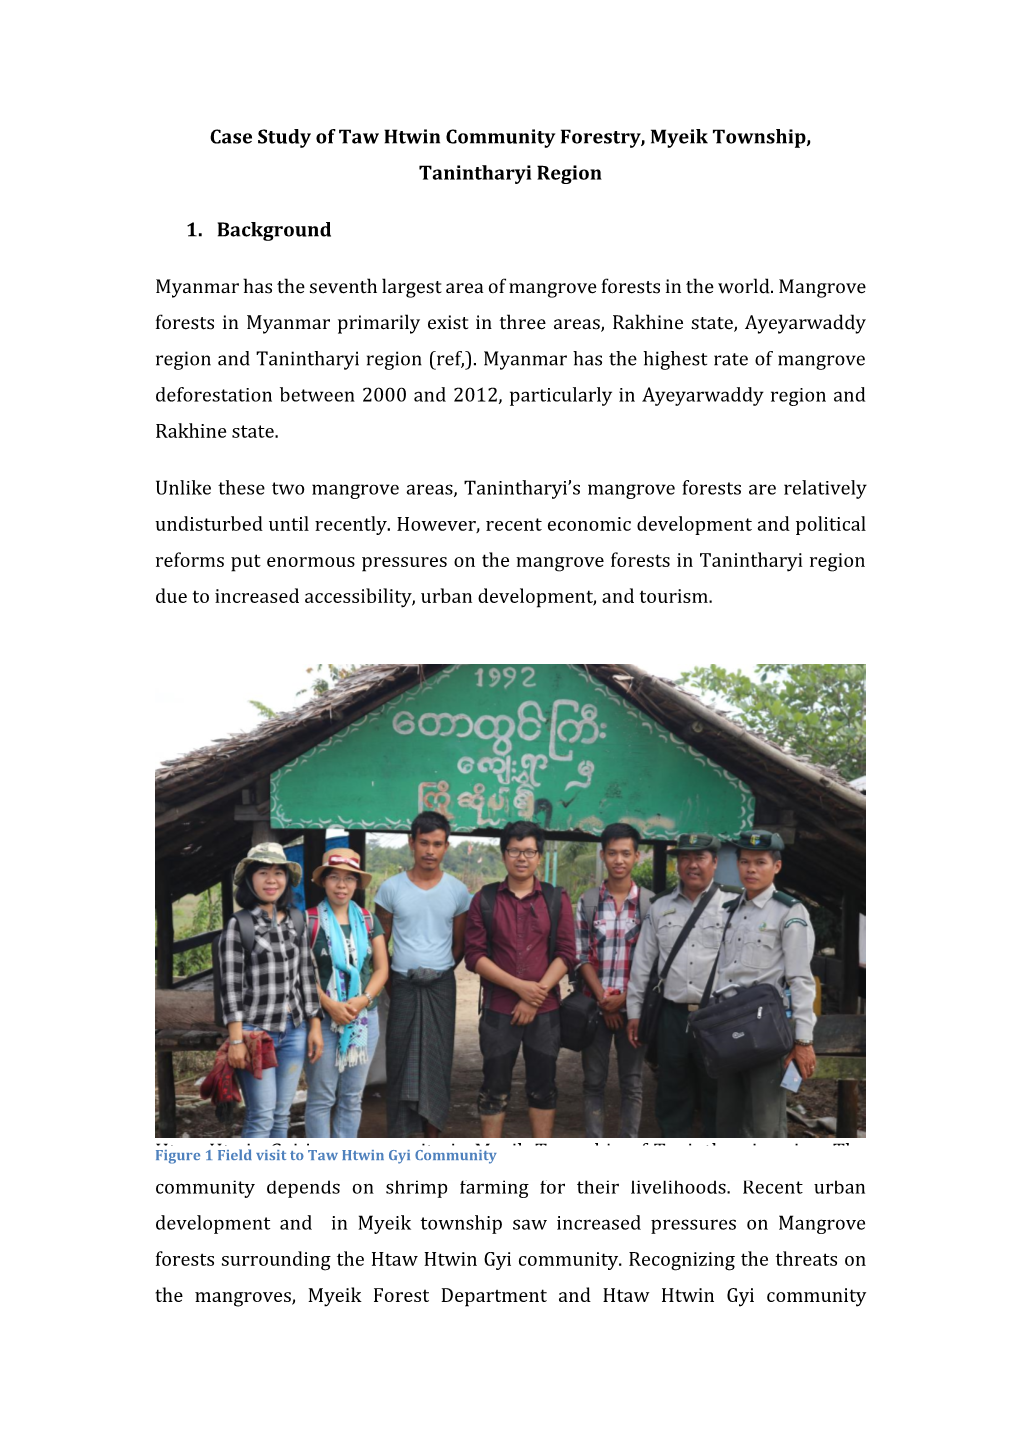 Case Study of Taw Htwin Community Forestry, Myeik Township, Tanintharyi Region